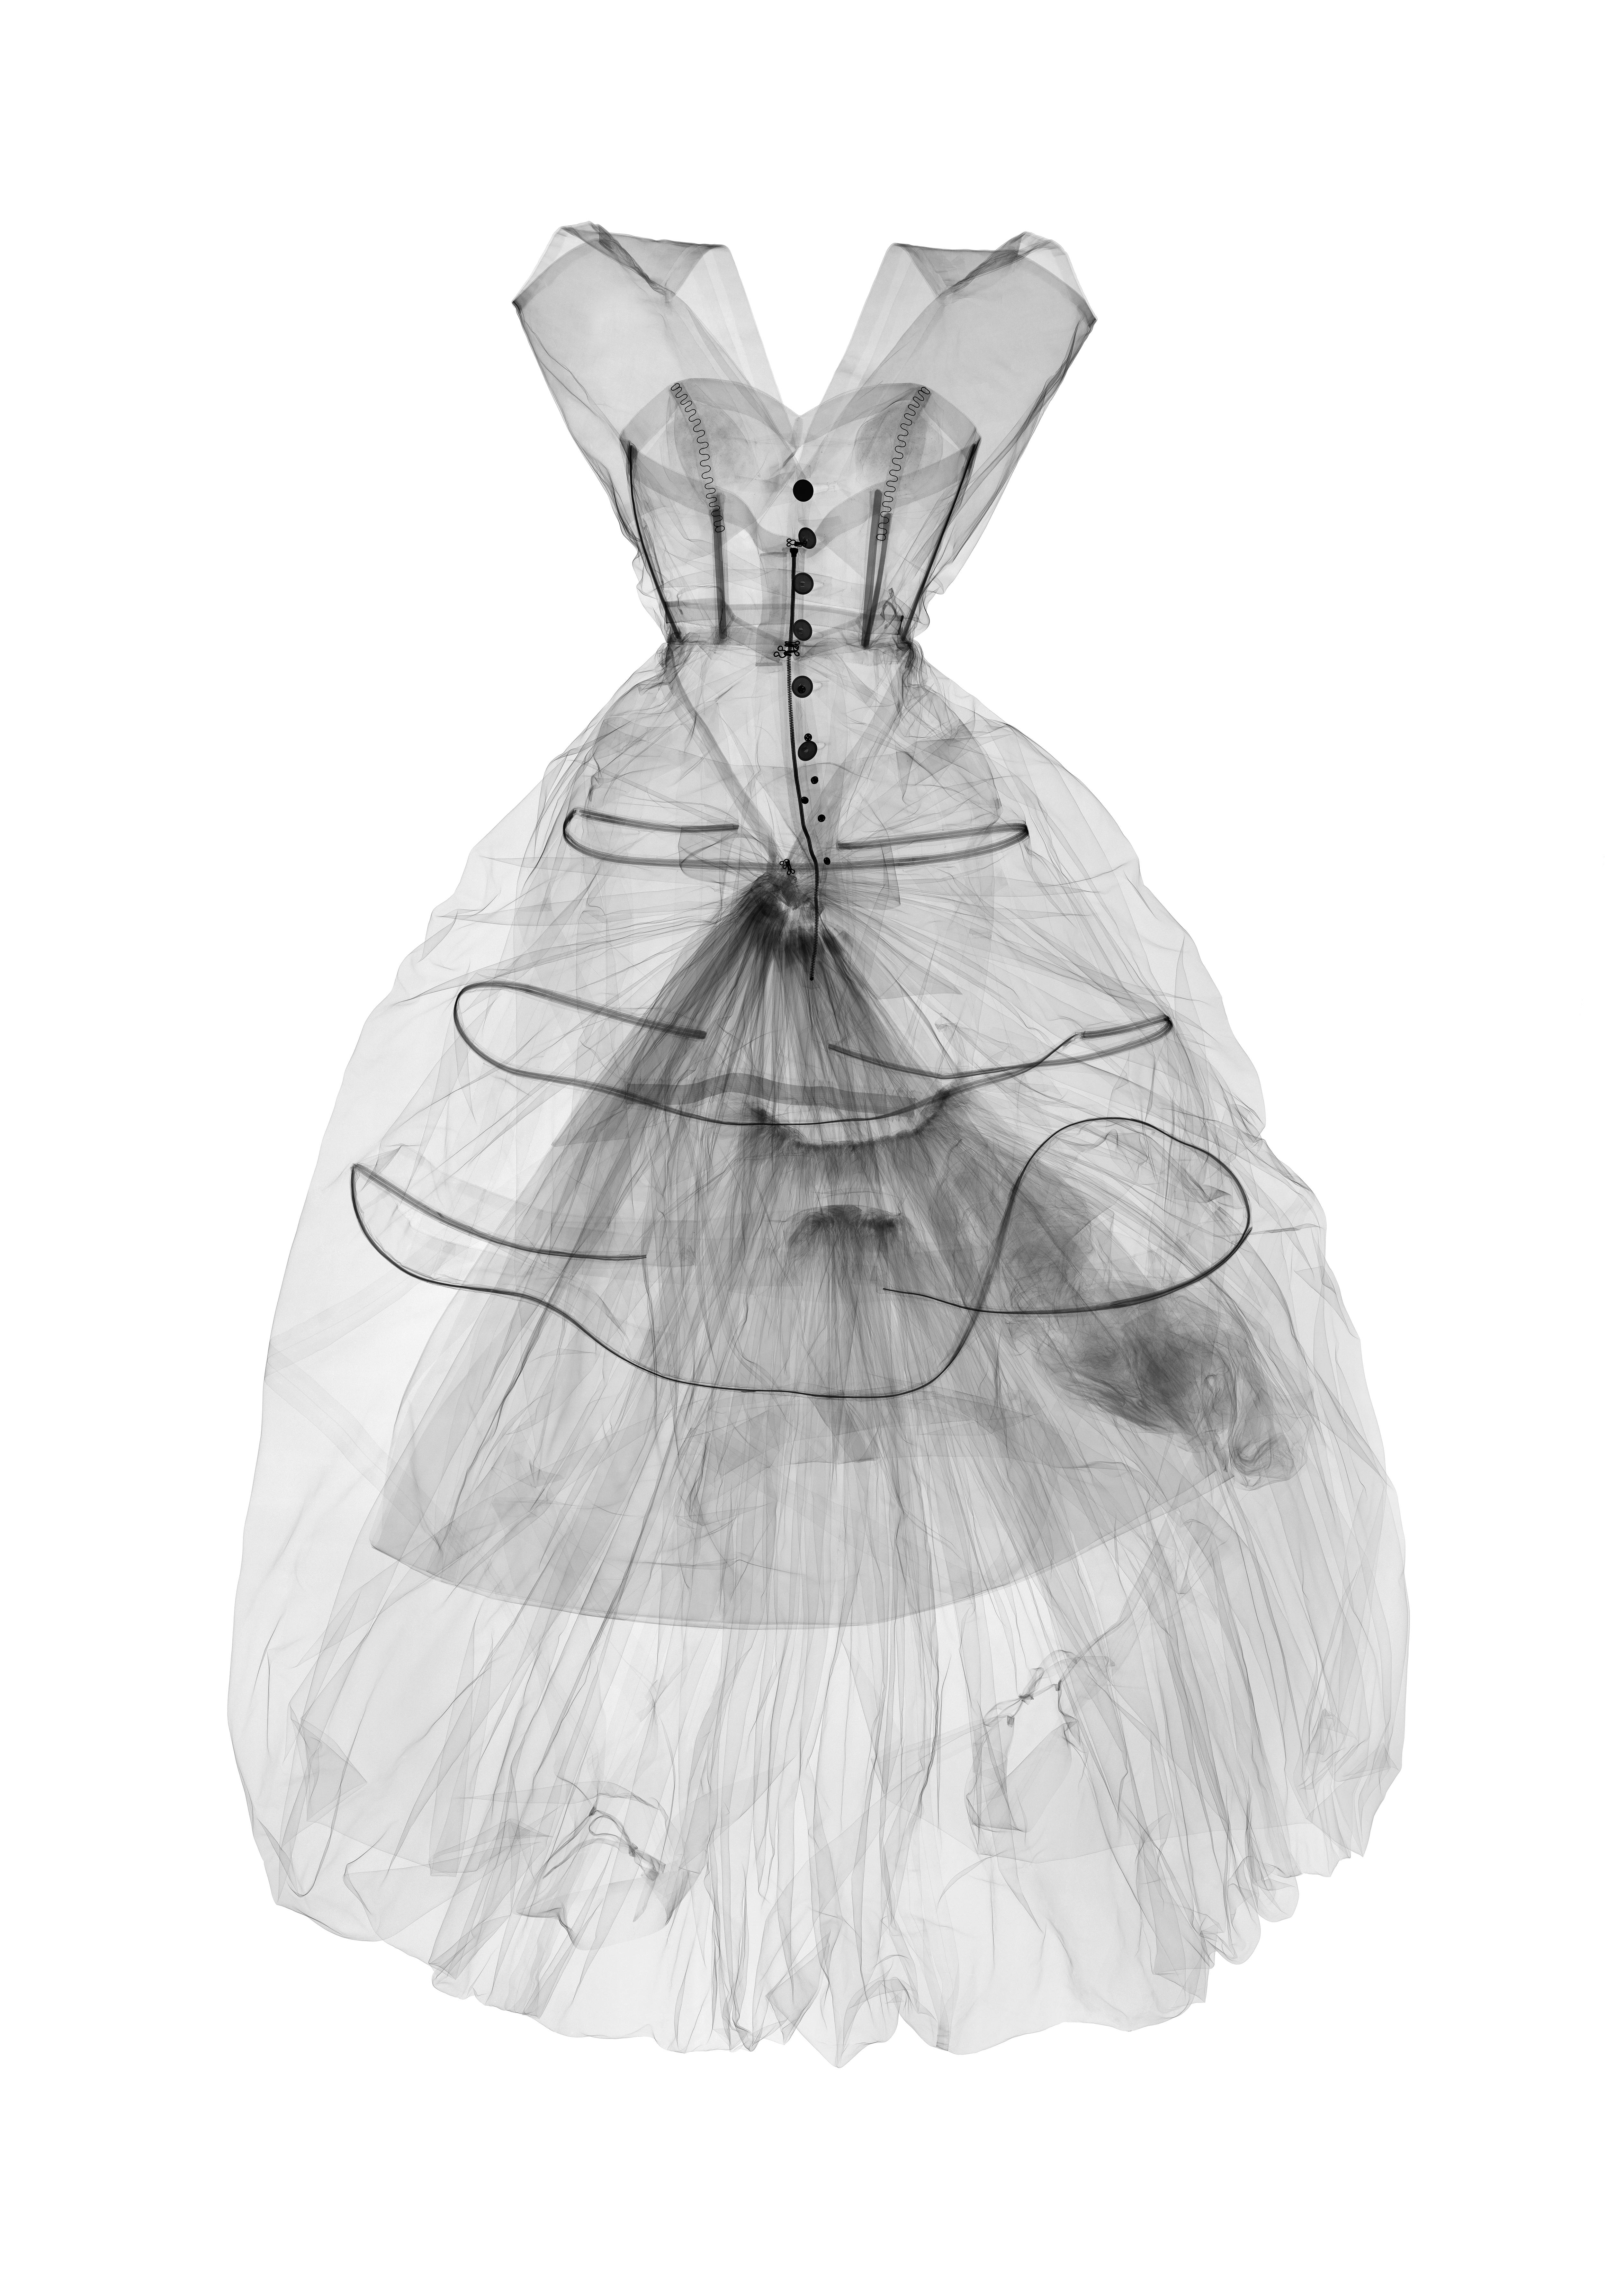 WORK: Nick Veasey's x-ray photographs of Balenciaga's garments